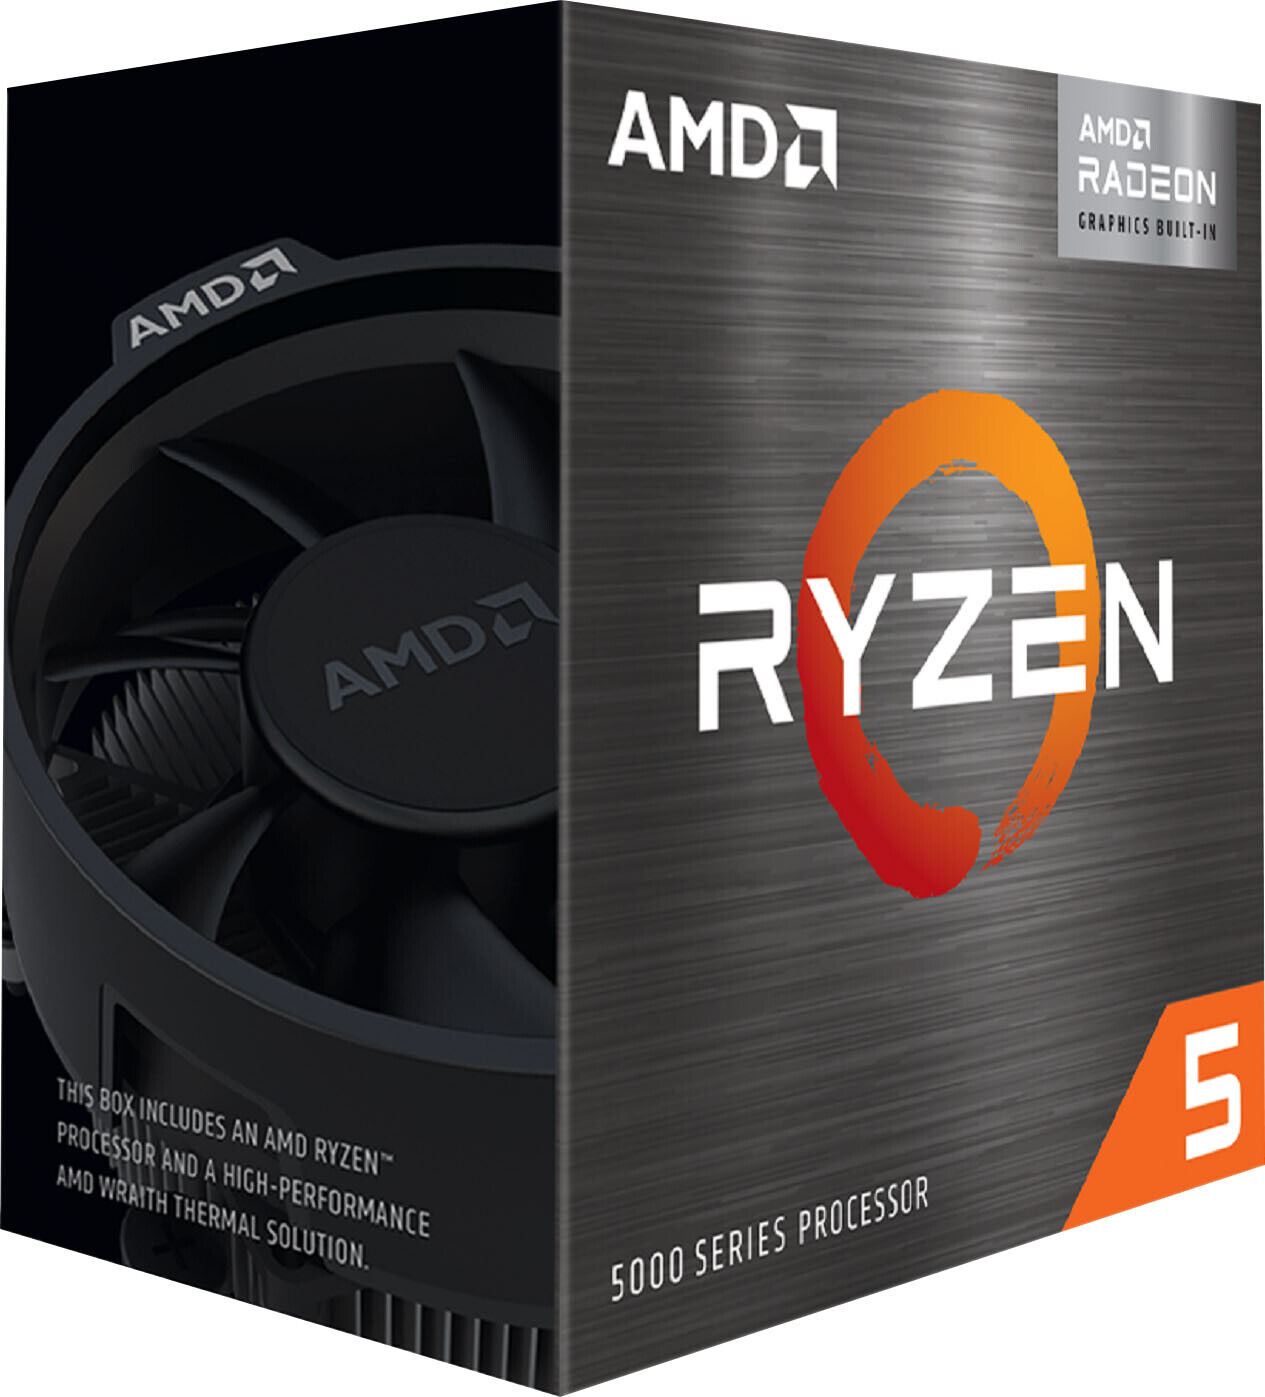 AMD Ryzen 5 5600G Processor (3.9 GHz, 6 Cores, Socket AM4) - 100 